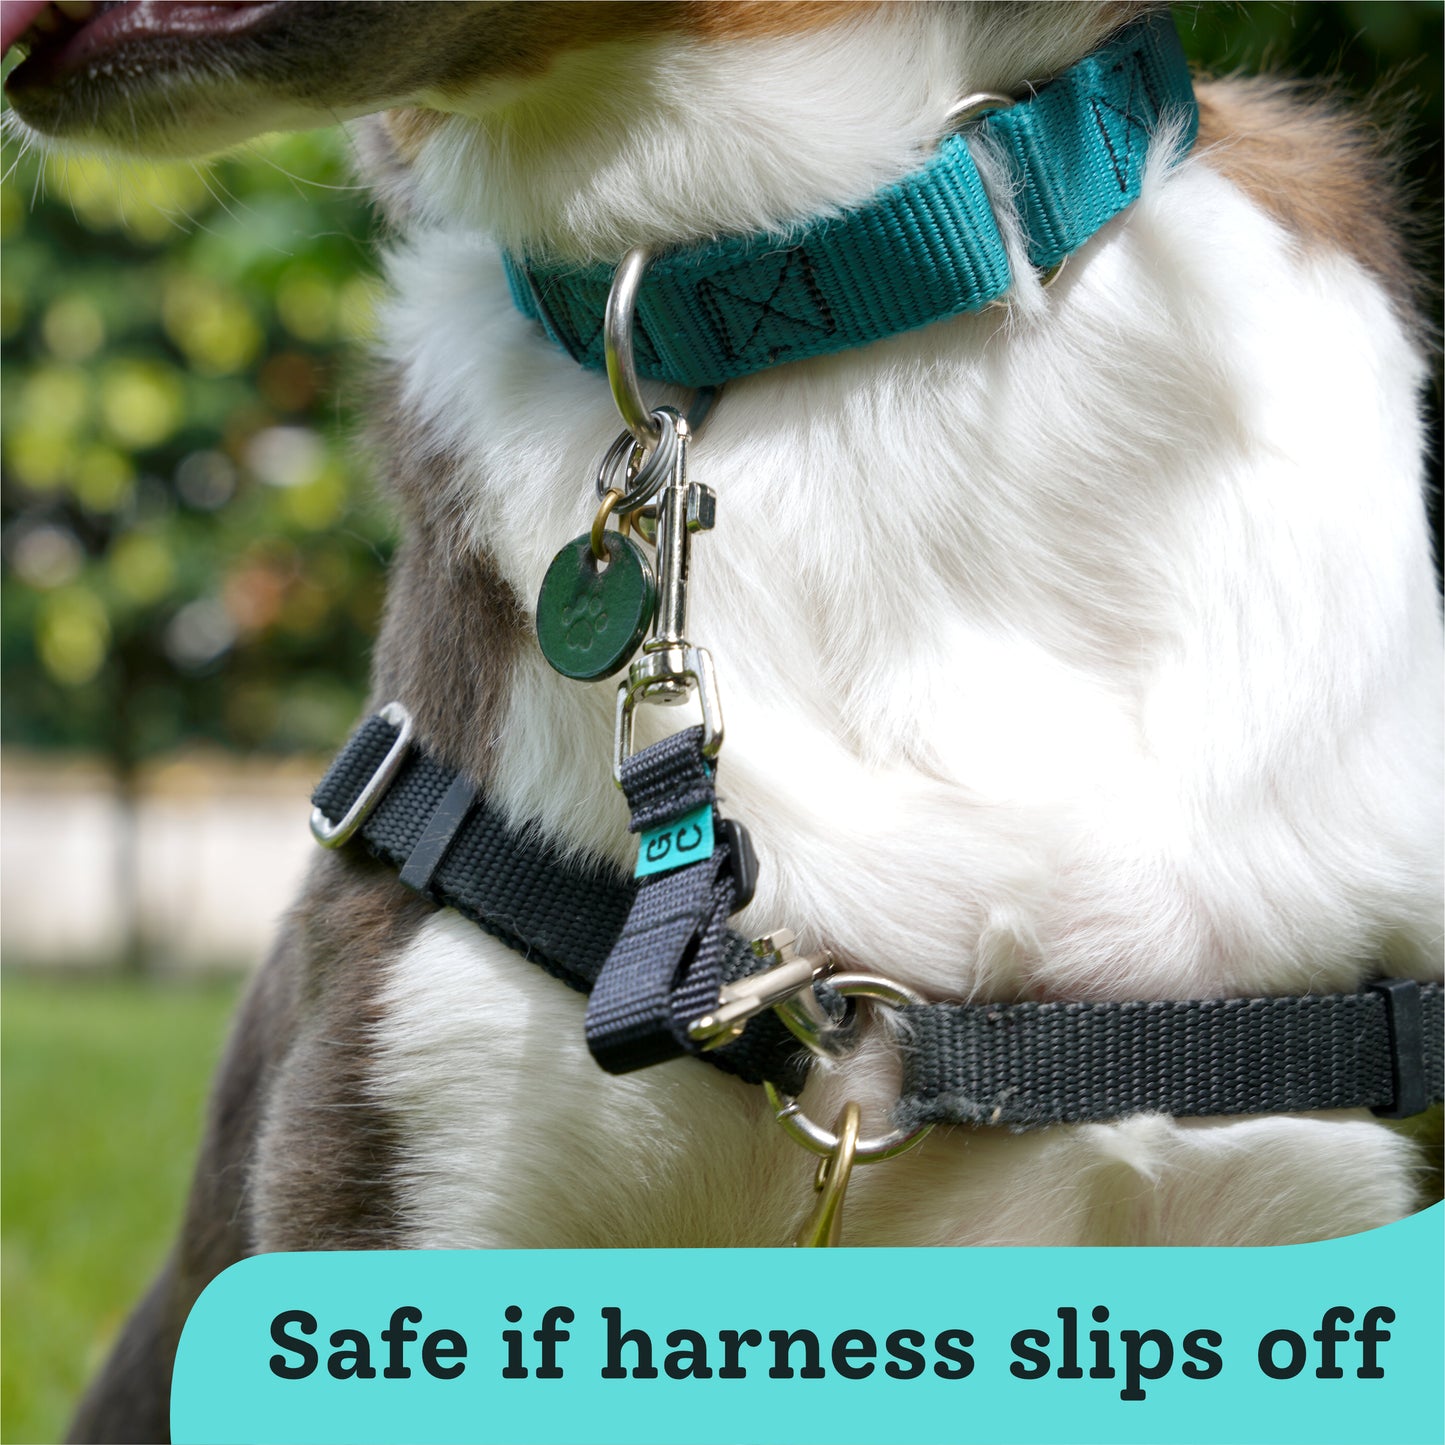 Safe if harness slips off